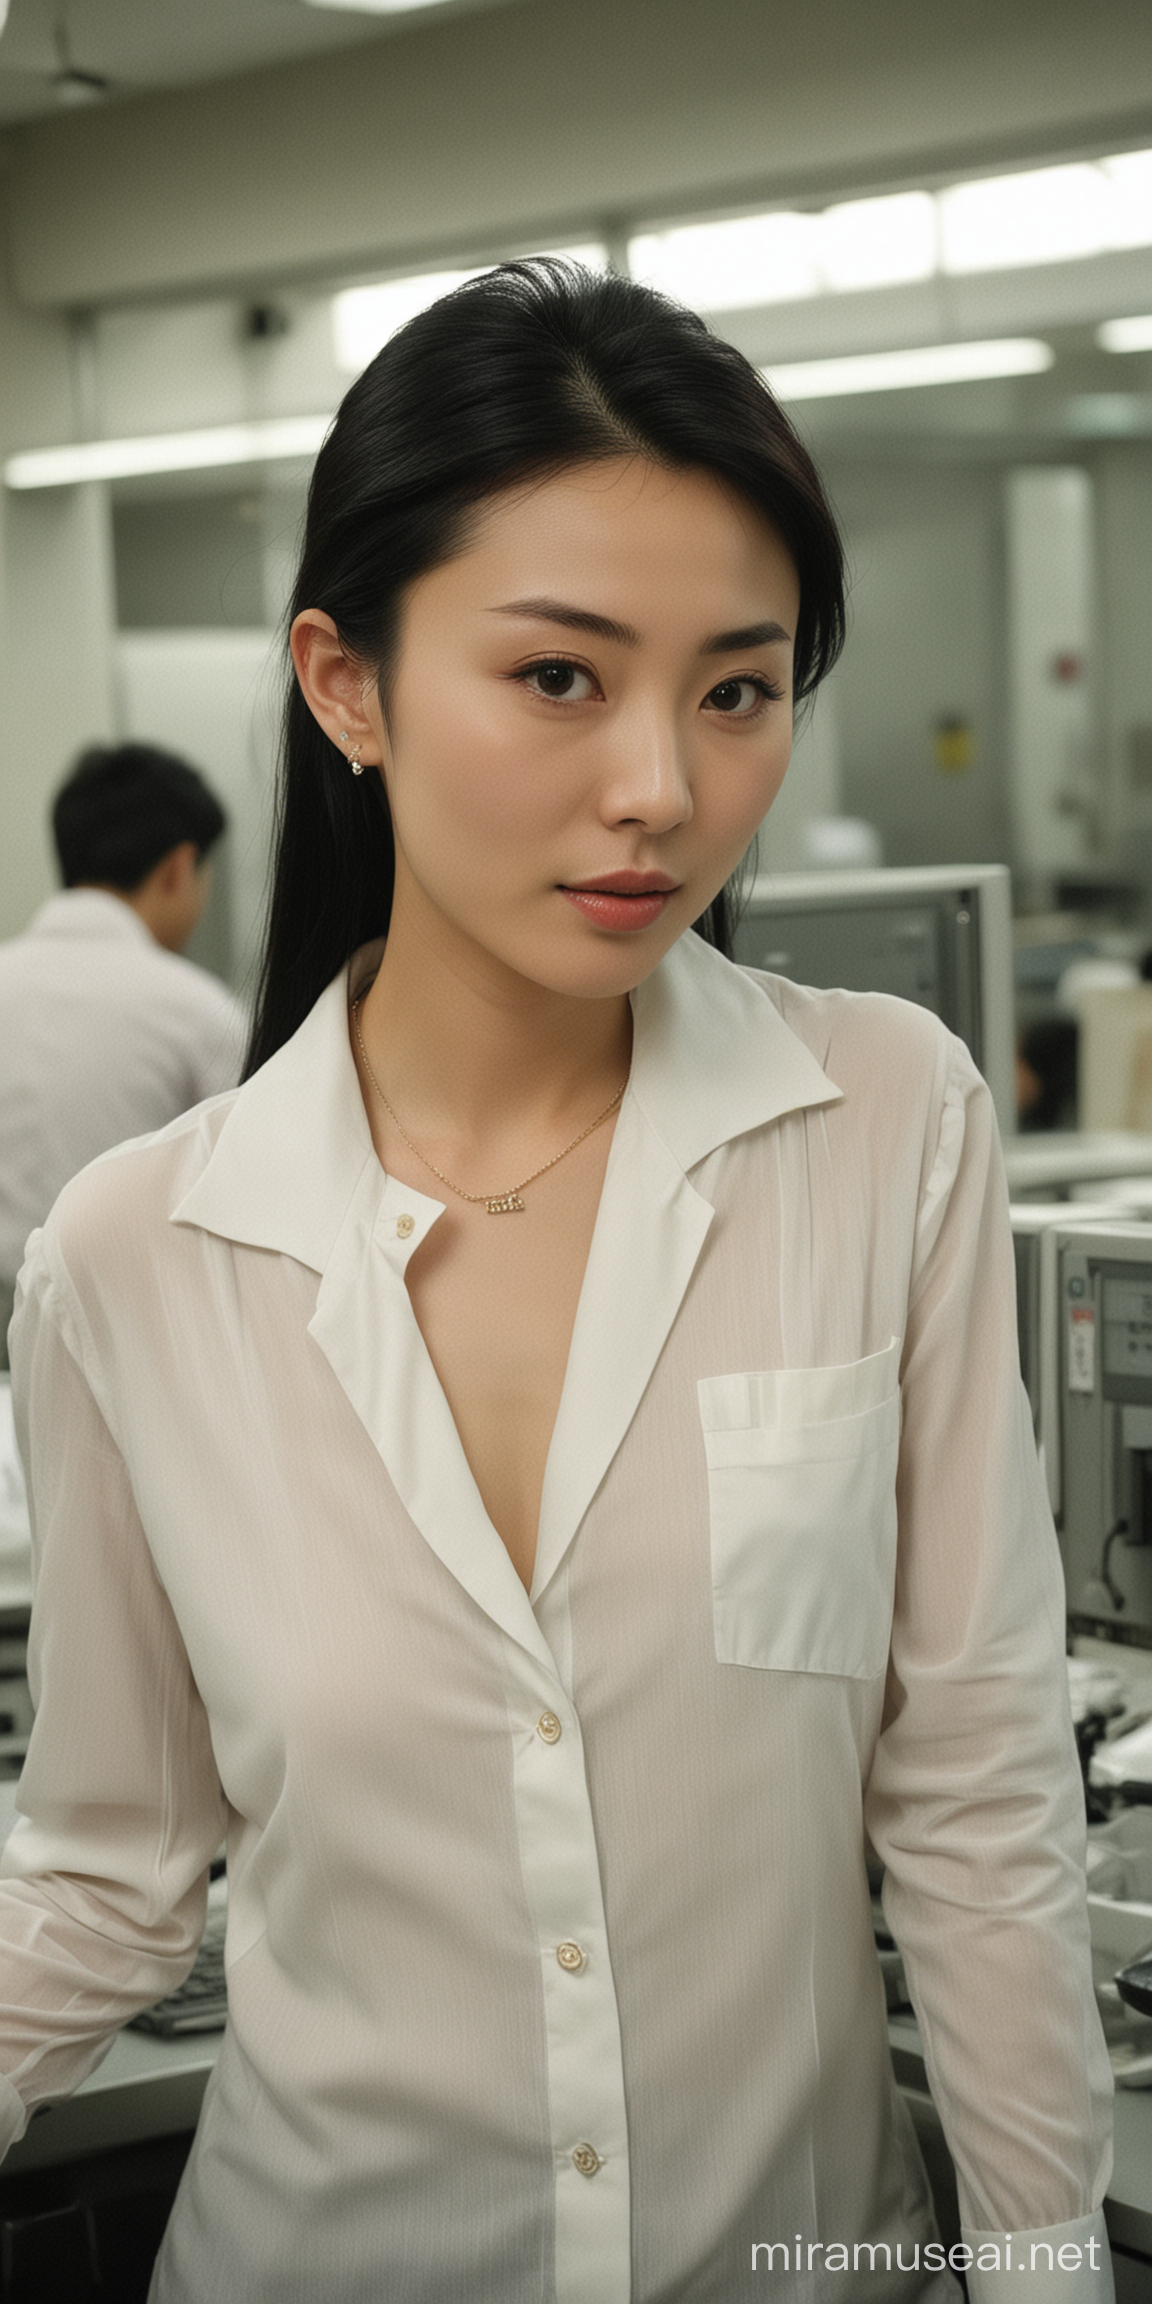 Chinese WhiteCollar Worker Maggie Cheung in Overtime